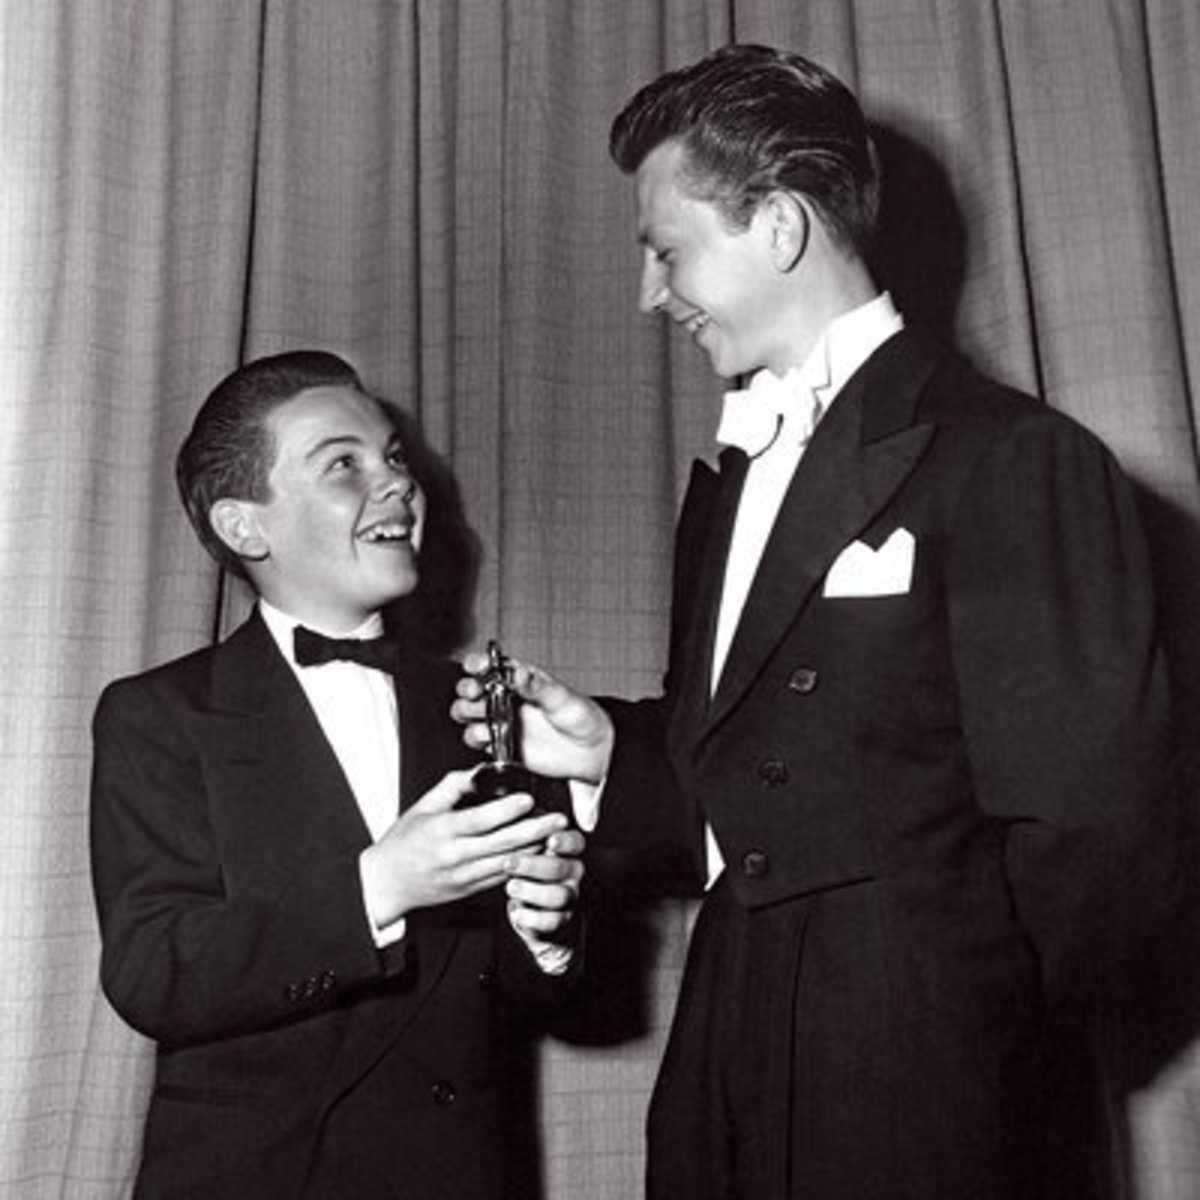 Driscoll with actor Doug O'Connor at the Academy Awards